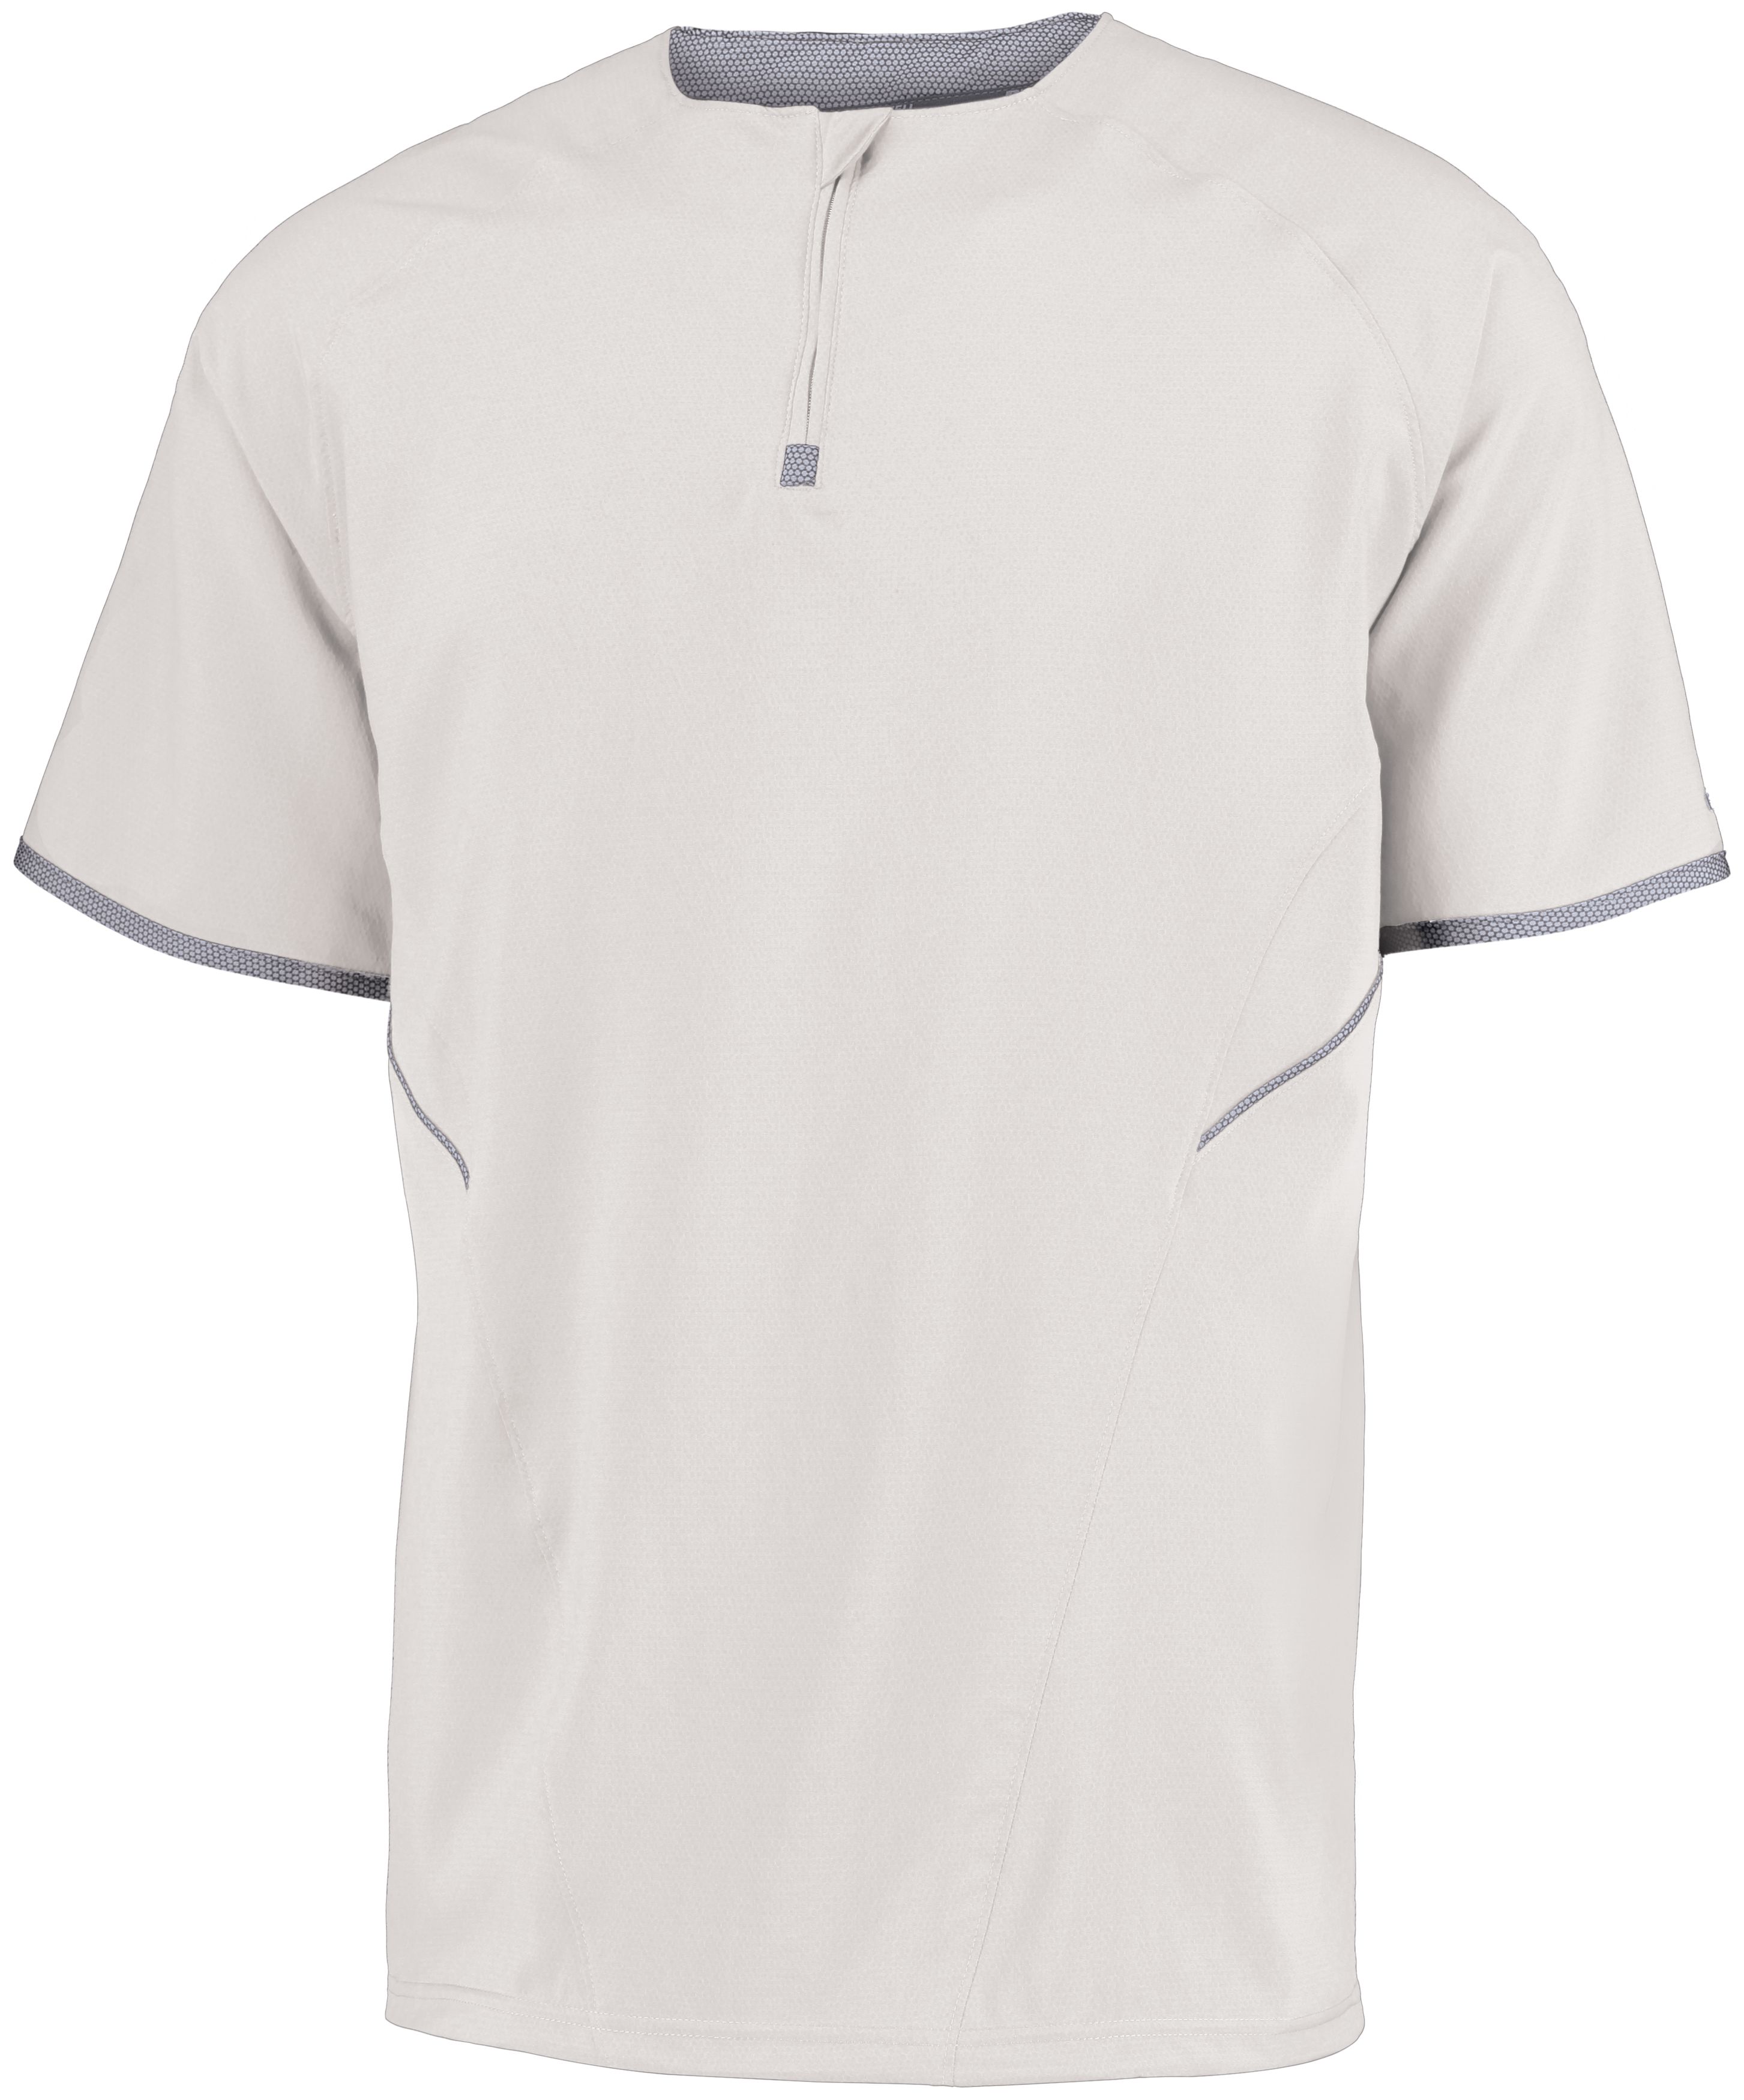 Russell Athletic 872RVM - Short Sleeve Pullover $35.91 - T-Shirts